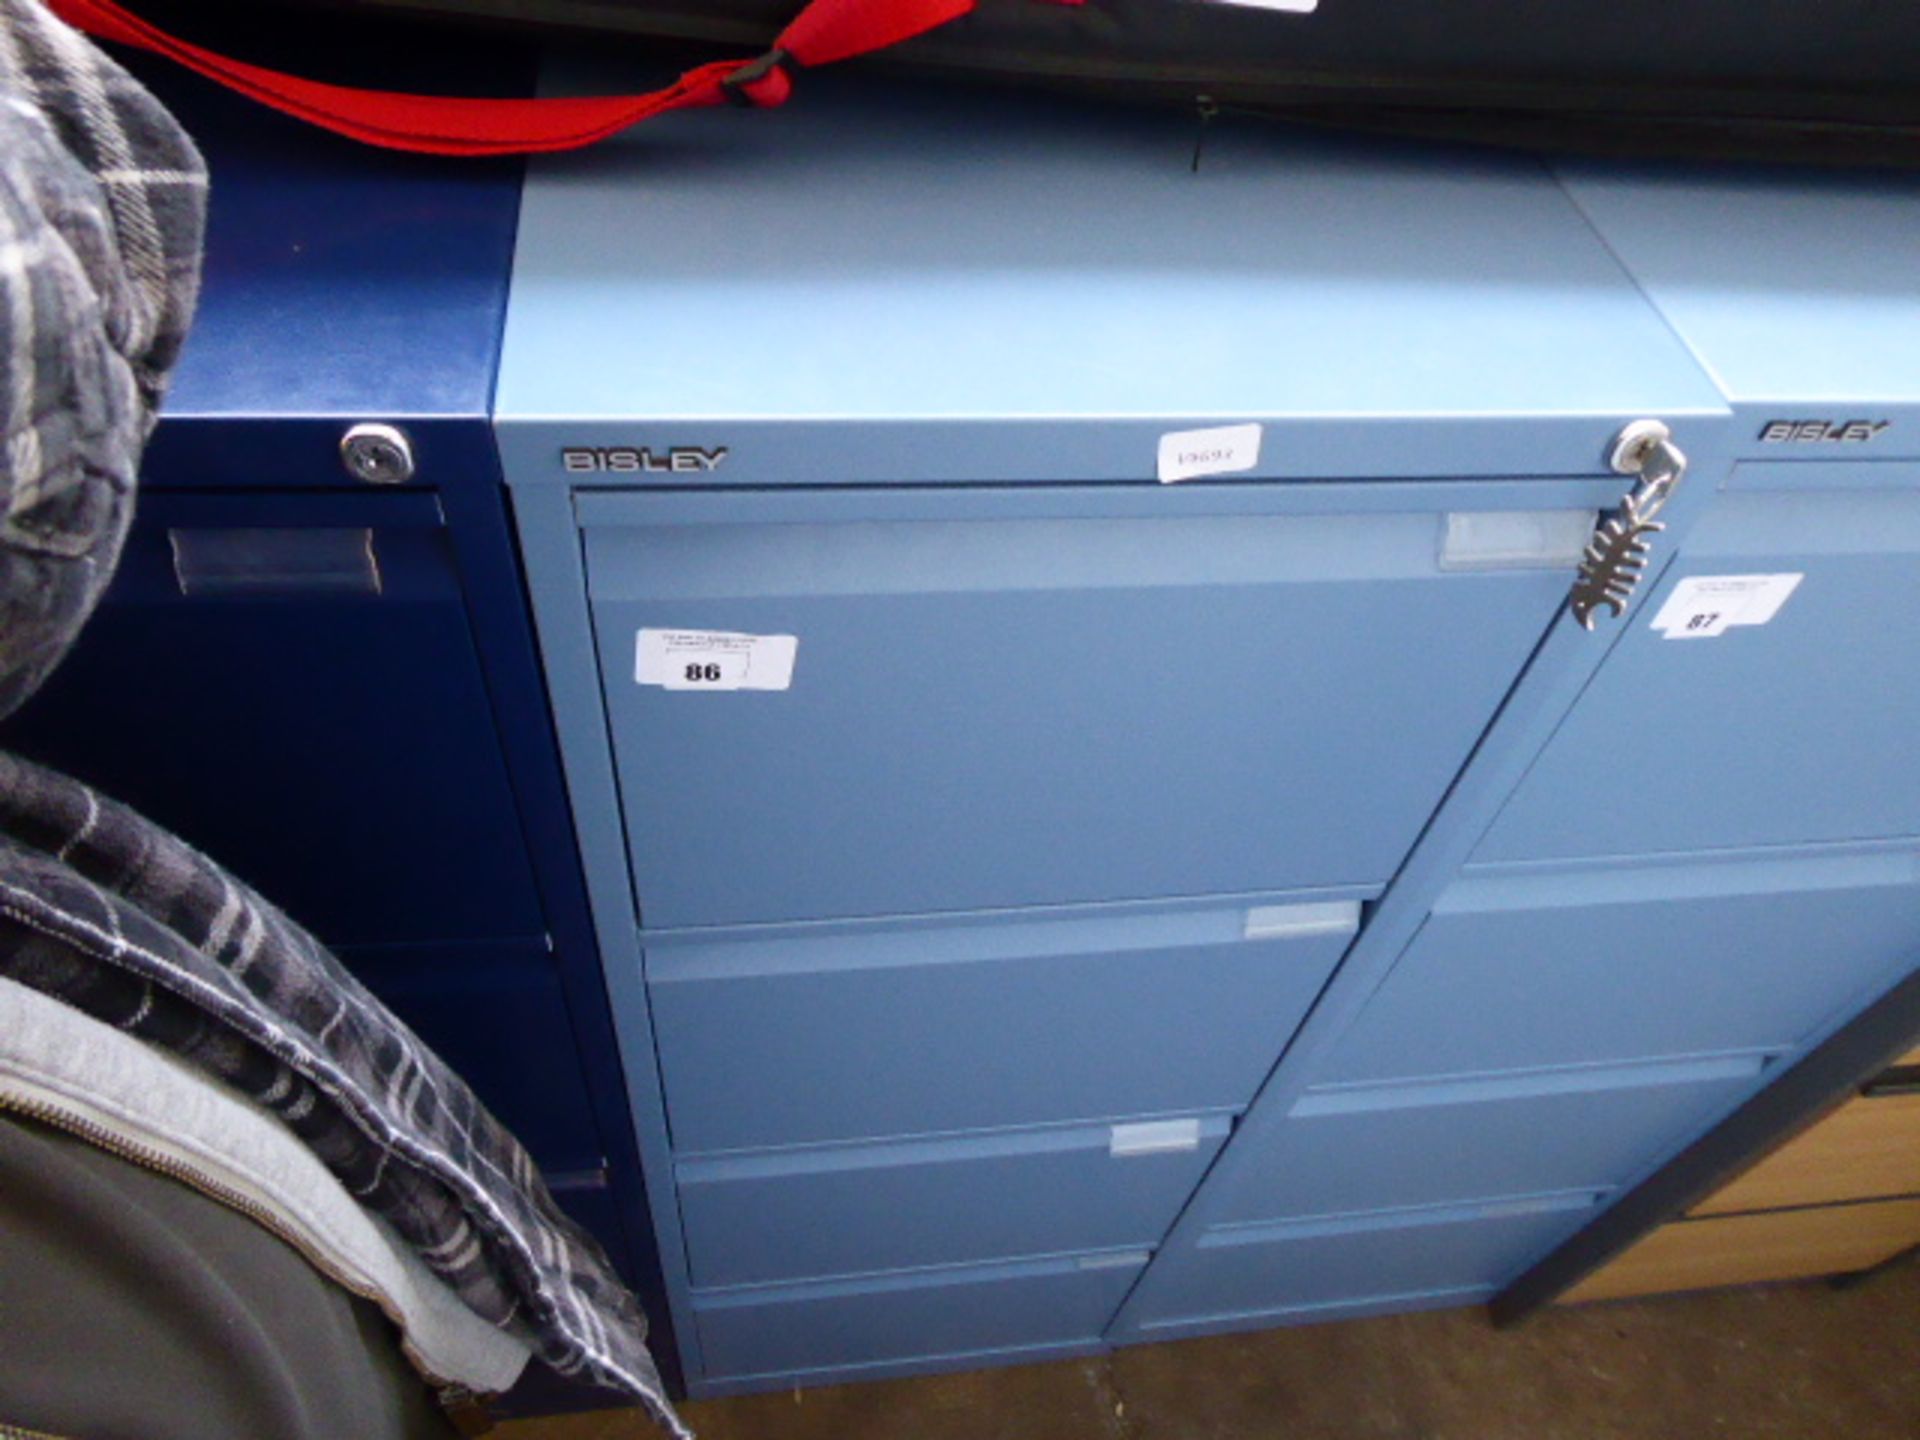 Bisley blue metal 4 drawer filing cabinet